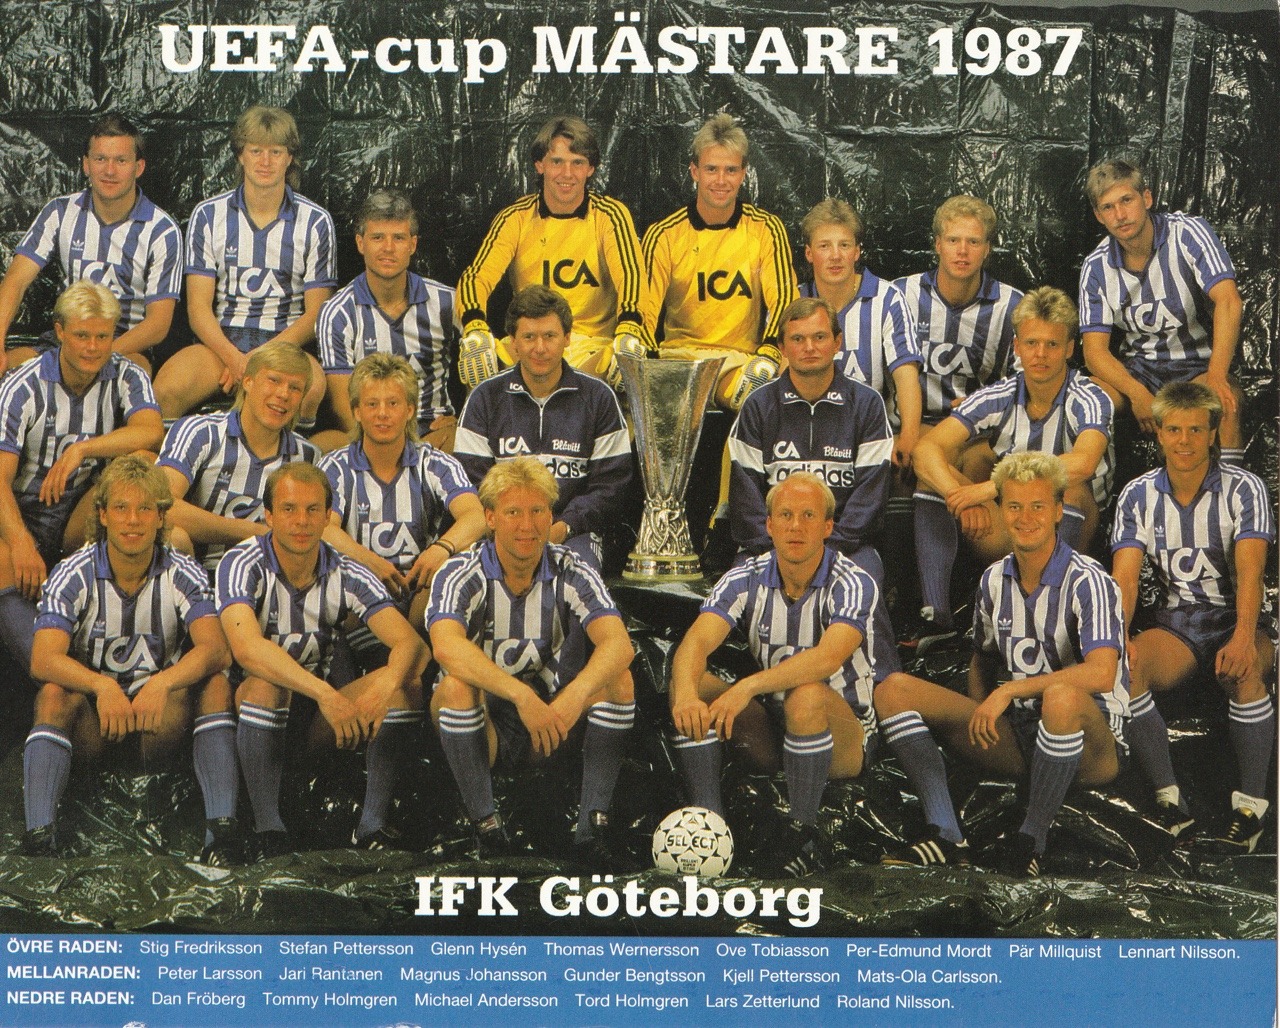 ‪El Göteborg se lleva la Copa de la UEFA al empatar 1-1 en casa del Dundee United. 2-1 En total eliminatoria #j210587‬